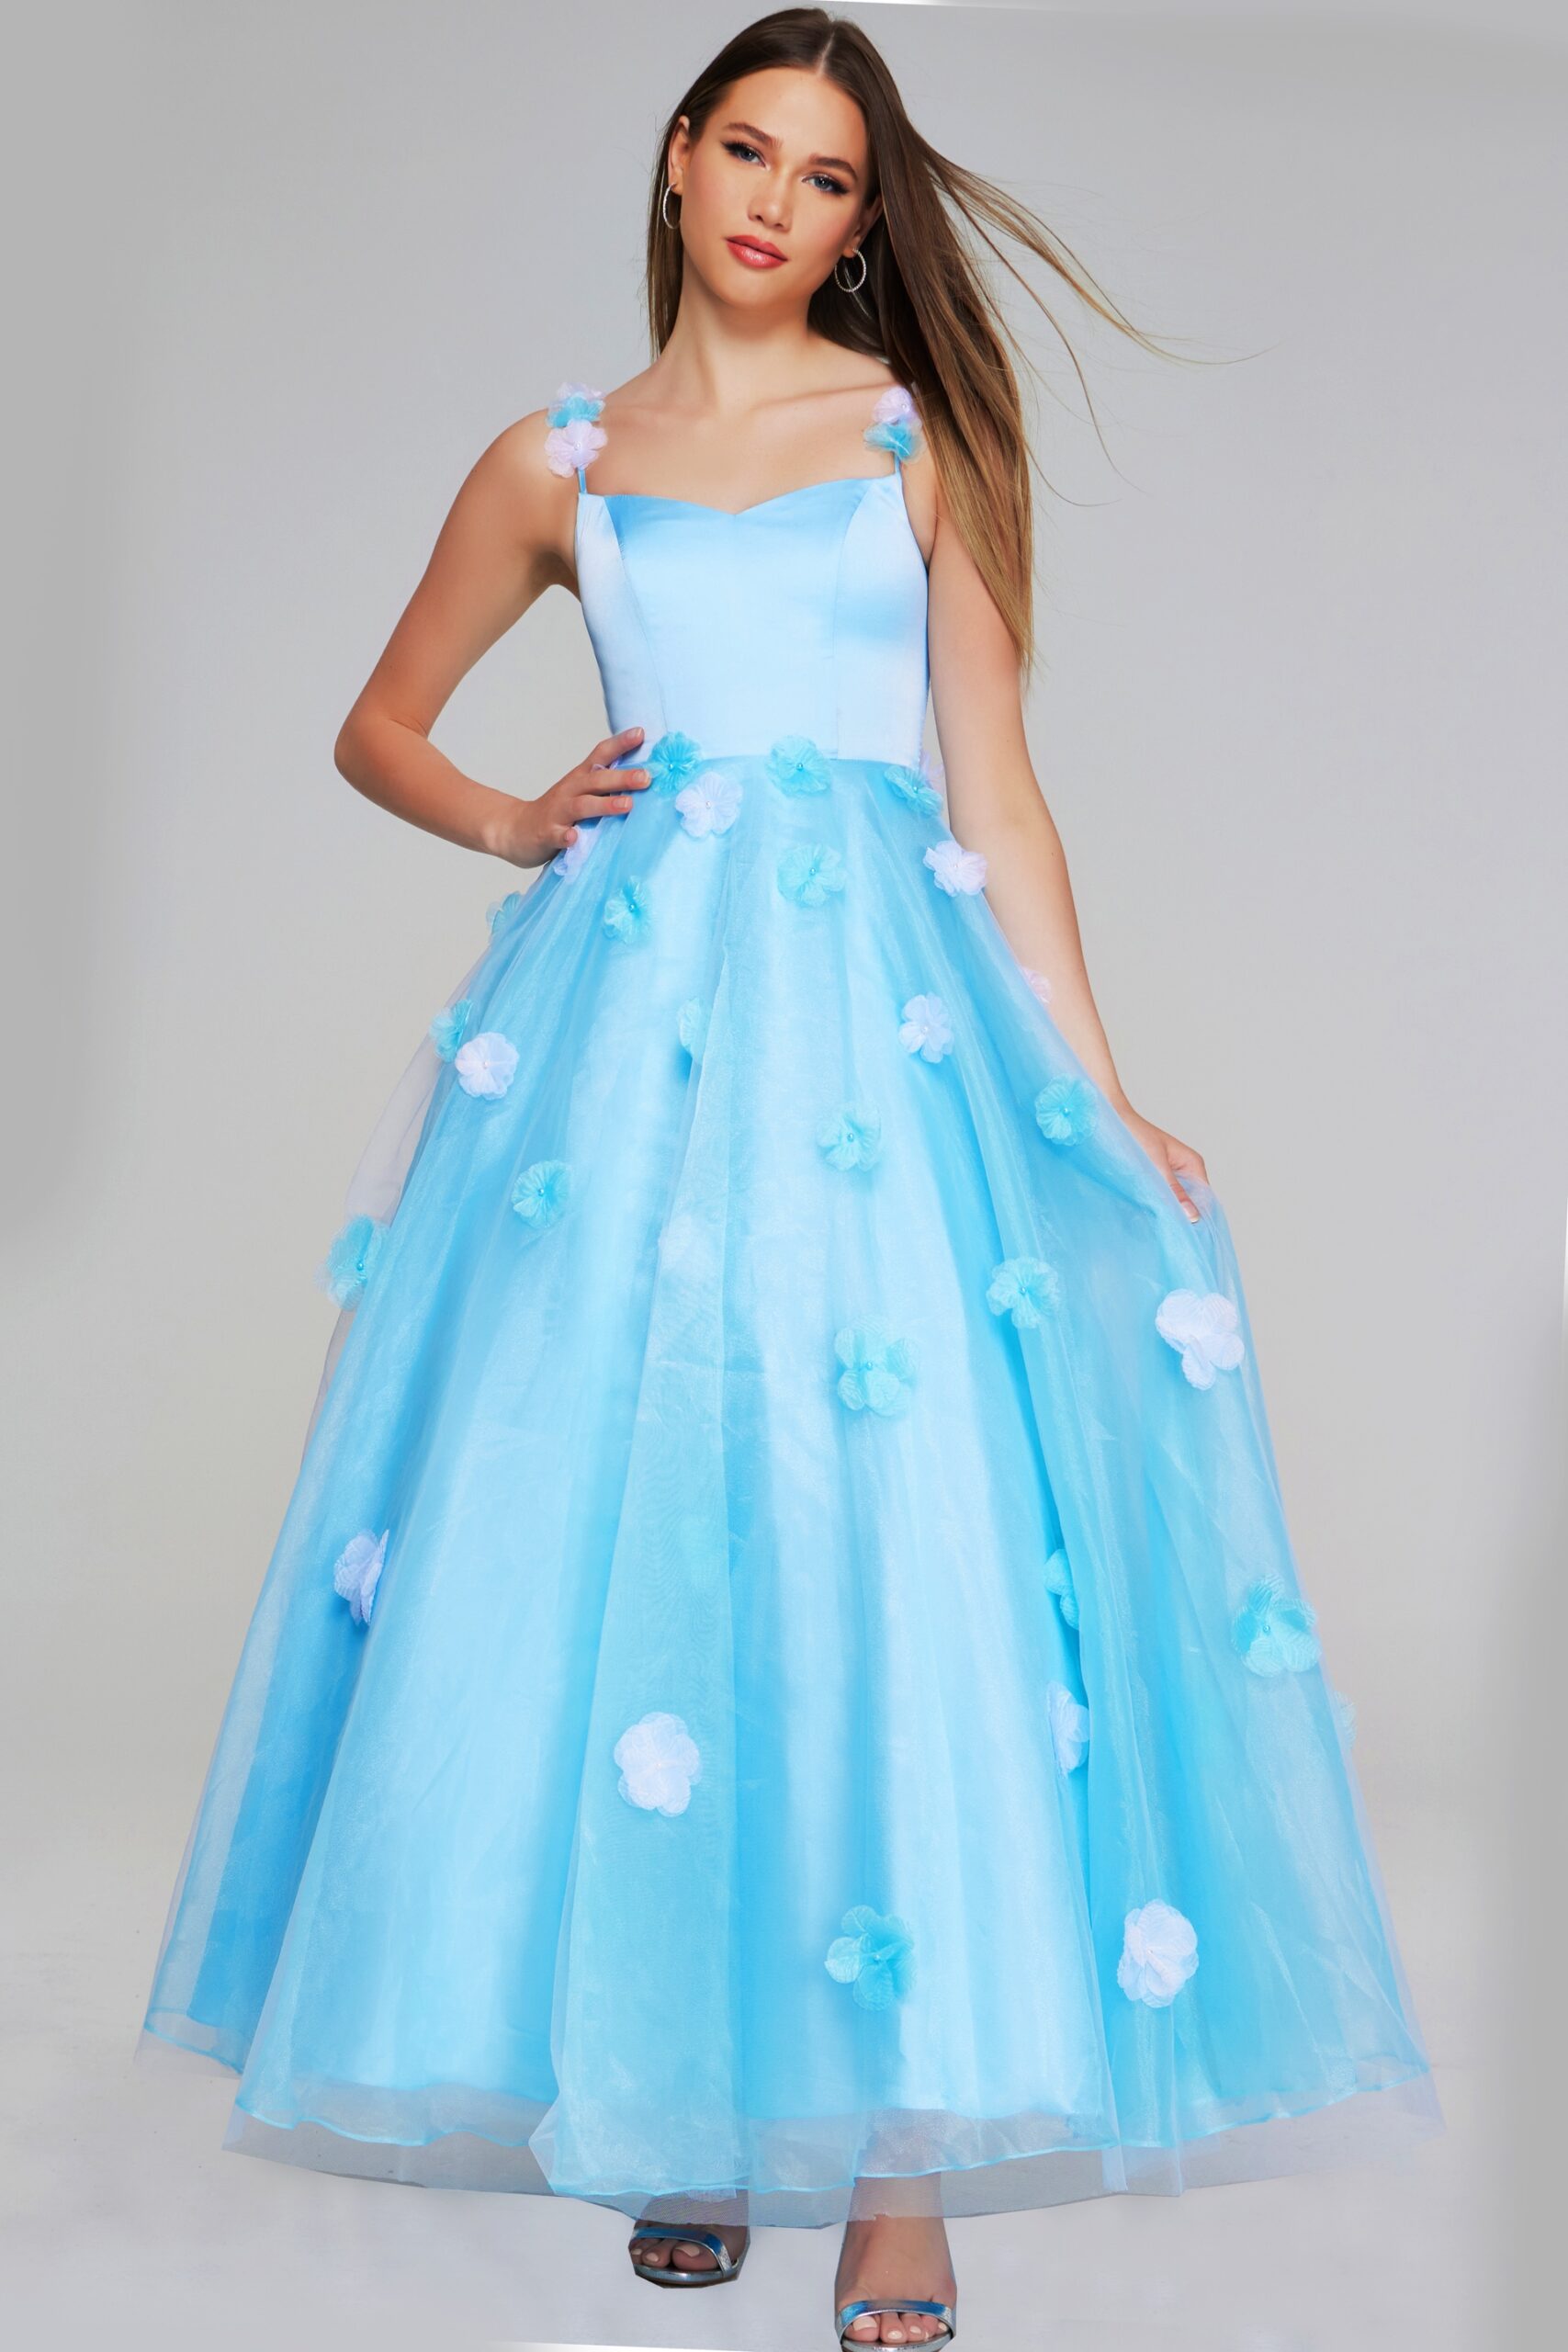 Model wearing Light Blue Floral Appliqué Ball Gown K25988